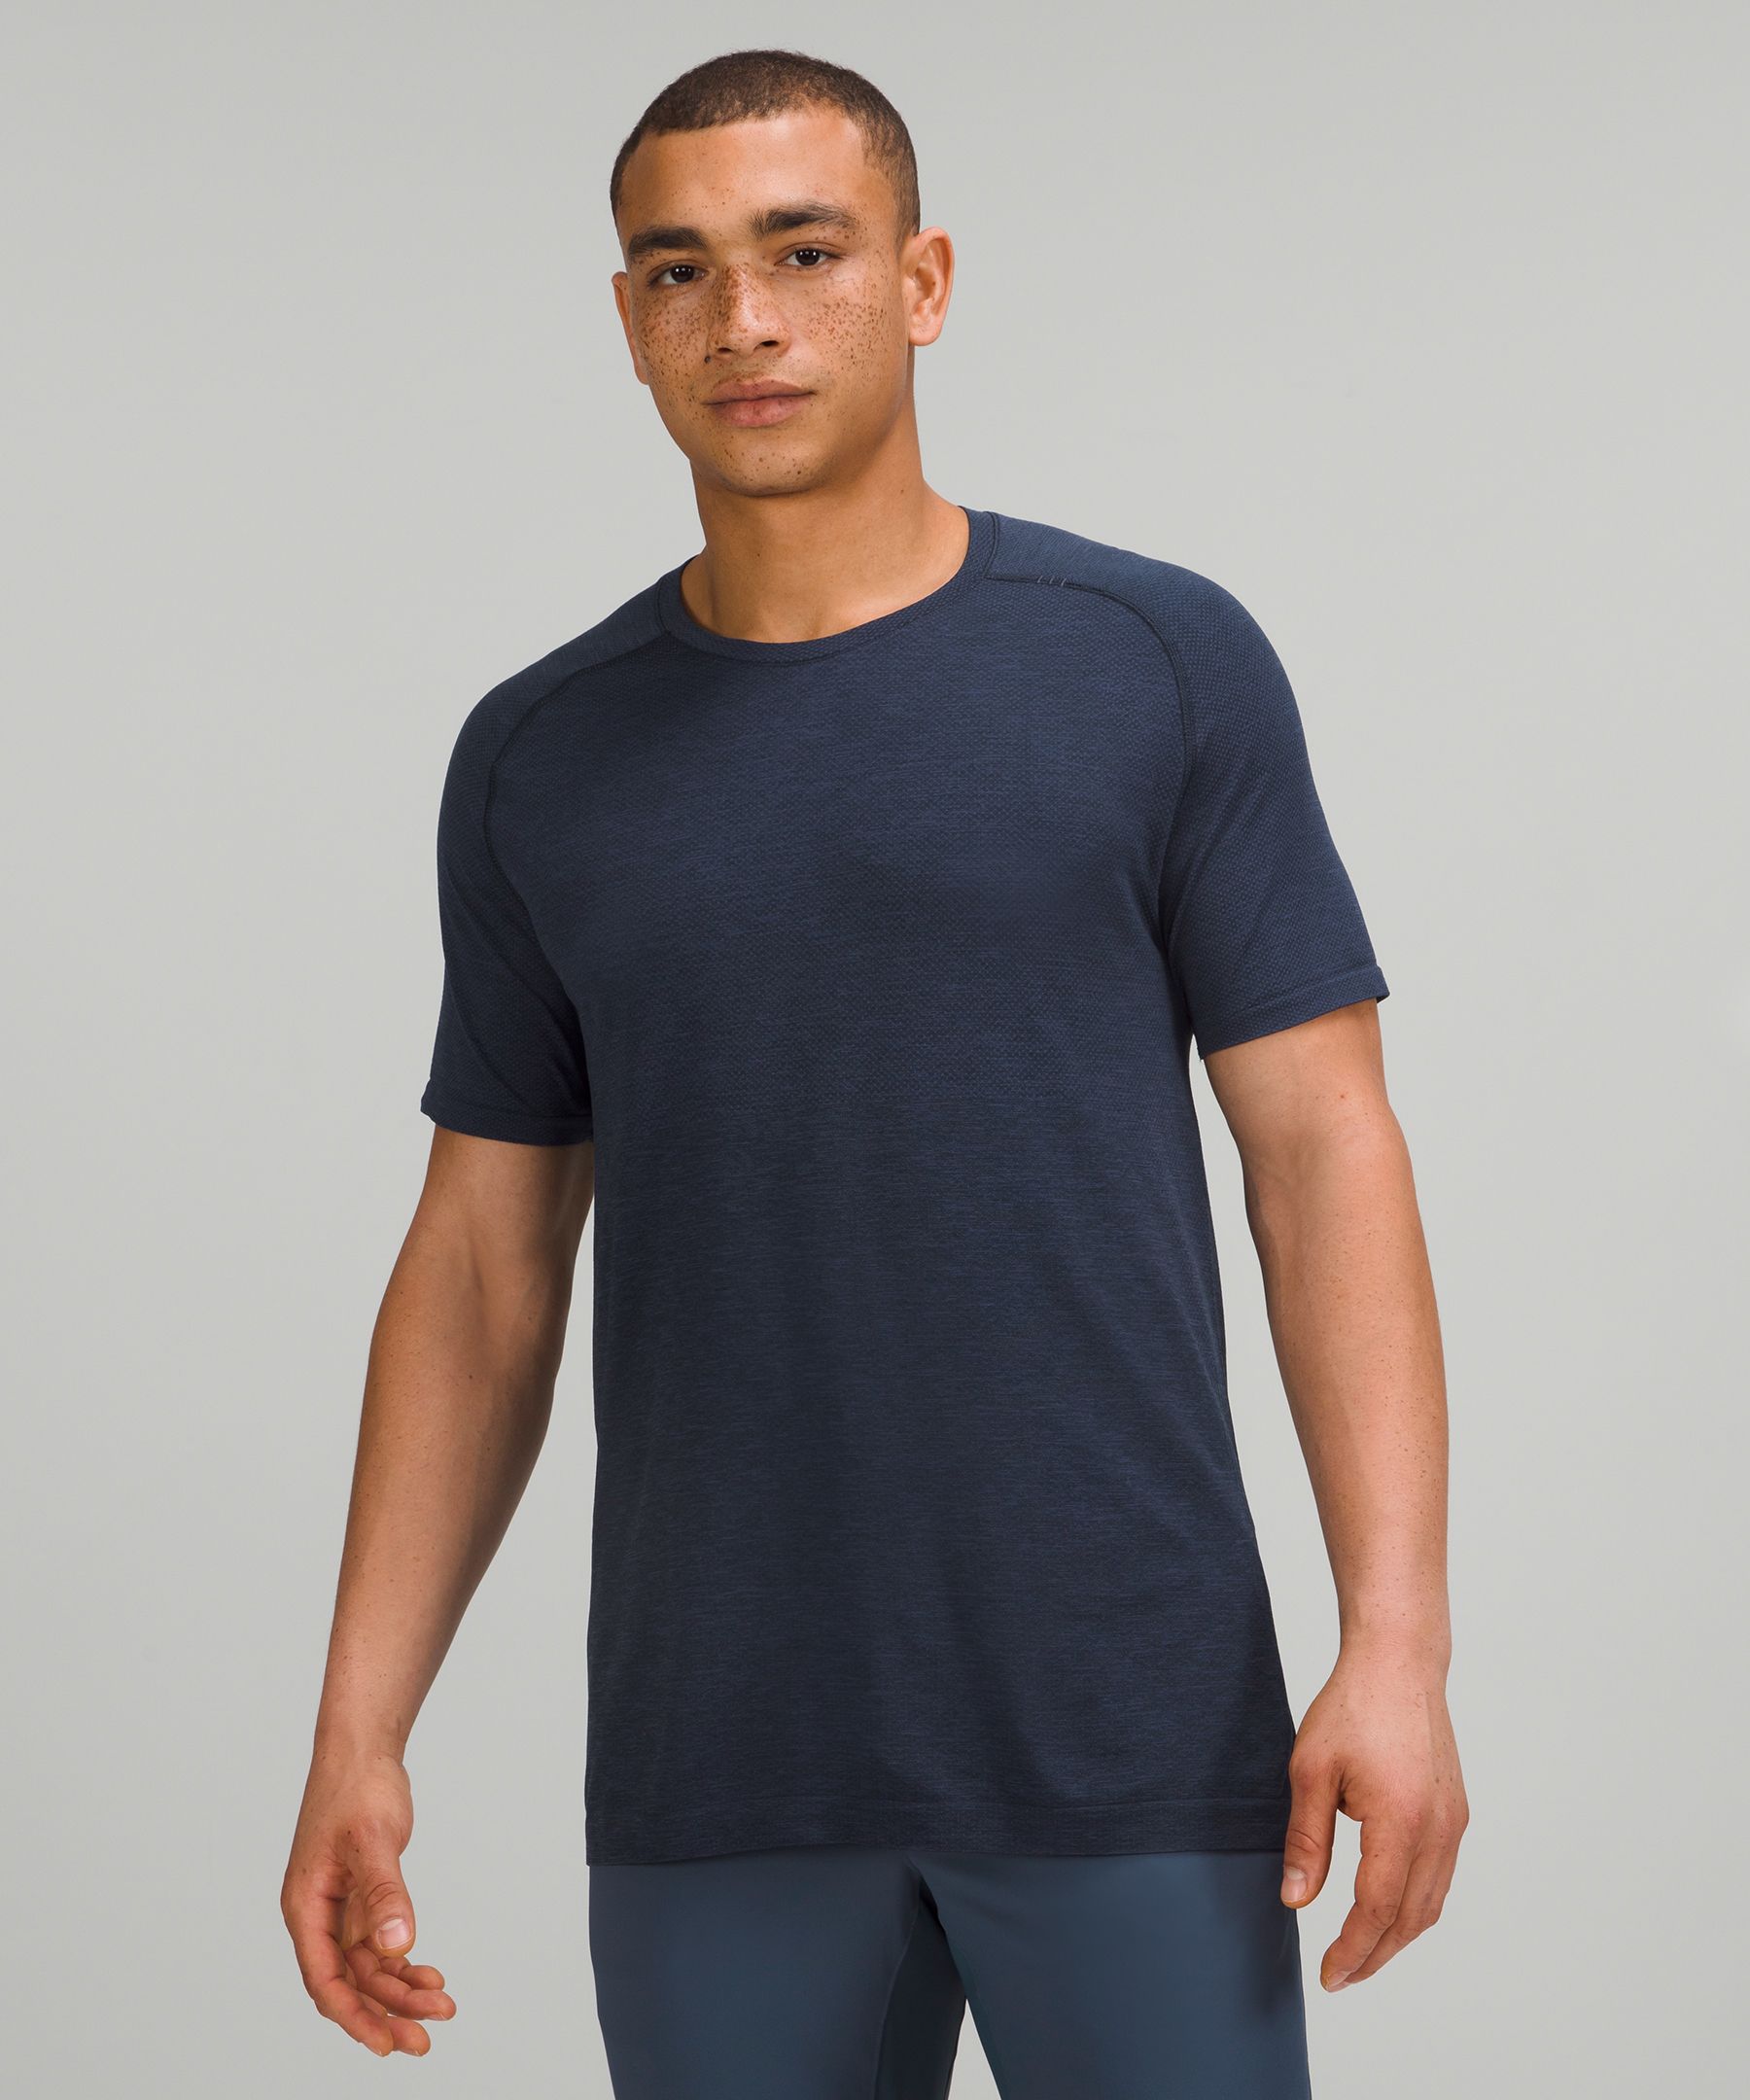 Lululemon Metal Vent Tech Short Sleeve Shirt 2.0 In Mineral Blue/true Navy